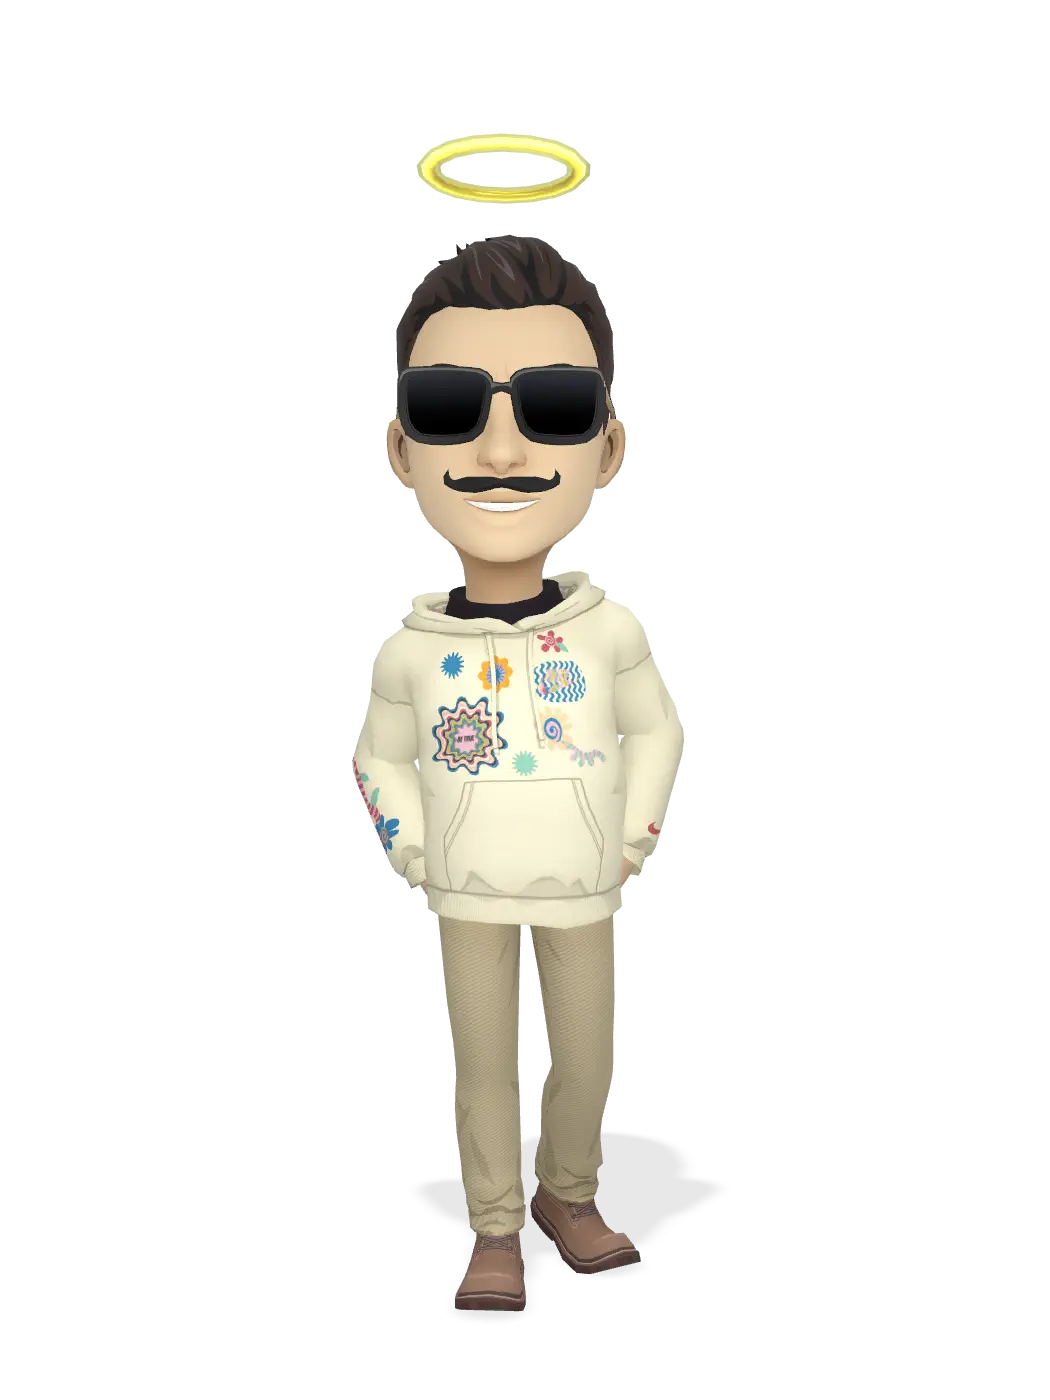 3D Bitmoji for dhimandeepak avatar